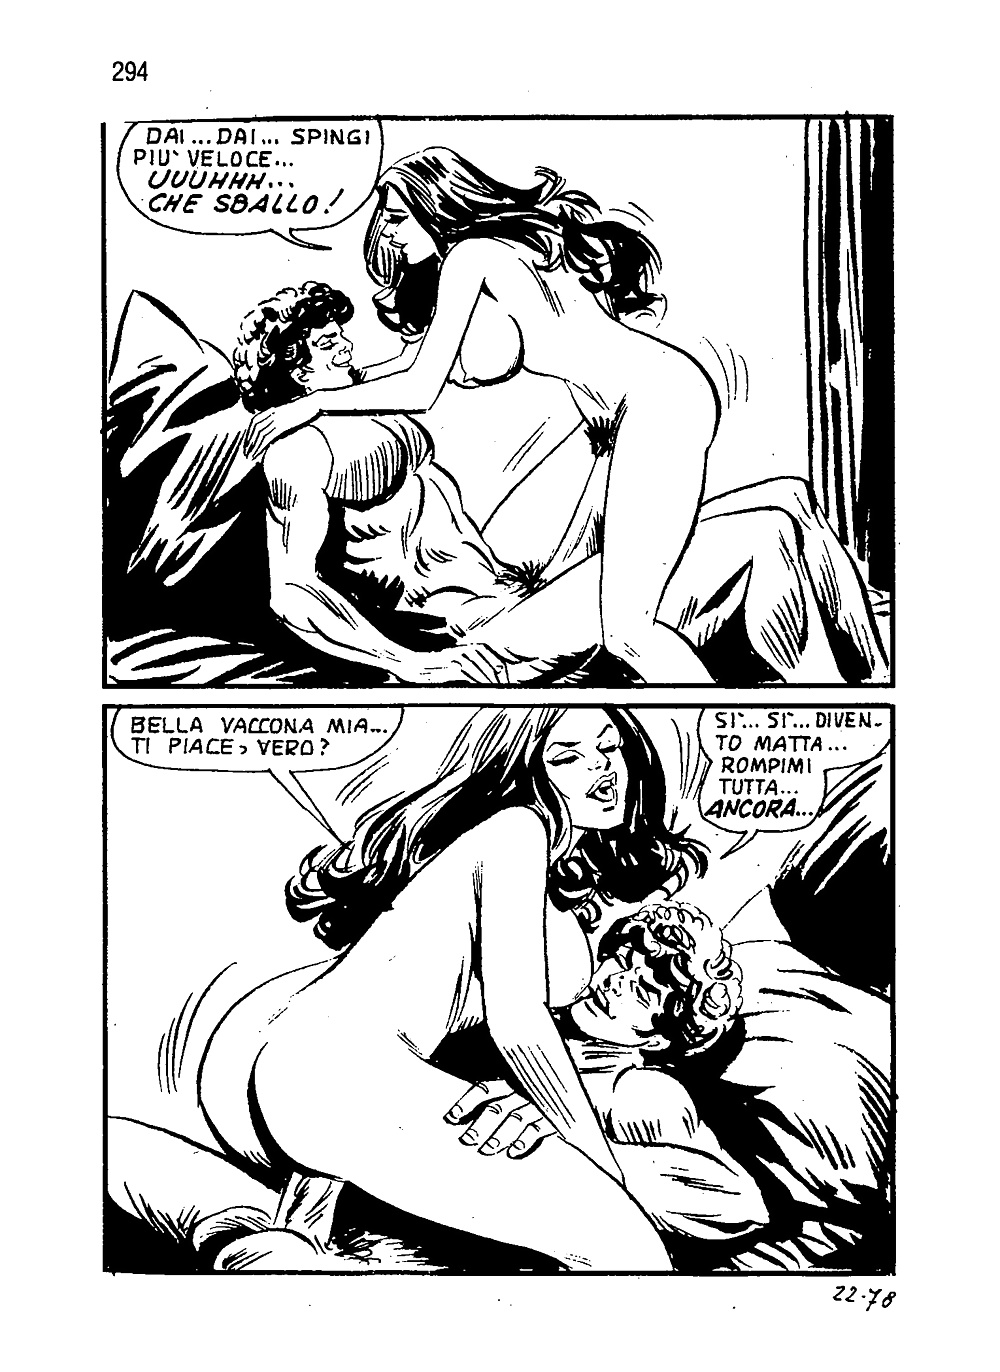 Antiguos comics porno italianos 10
 #39941121